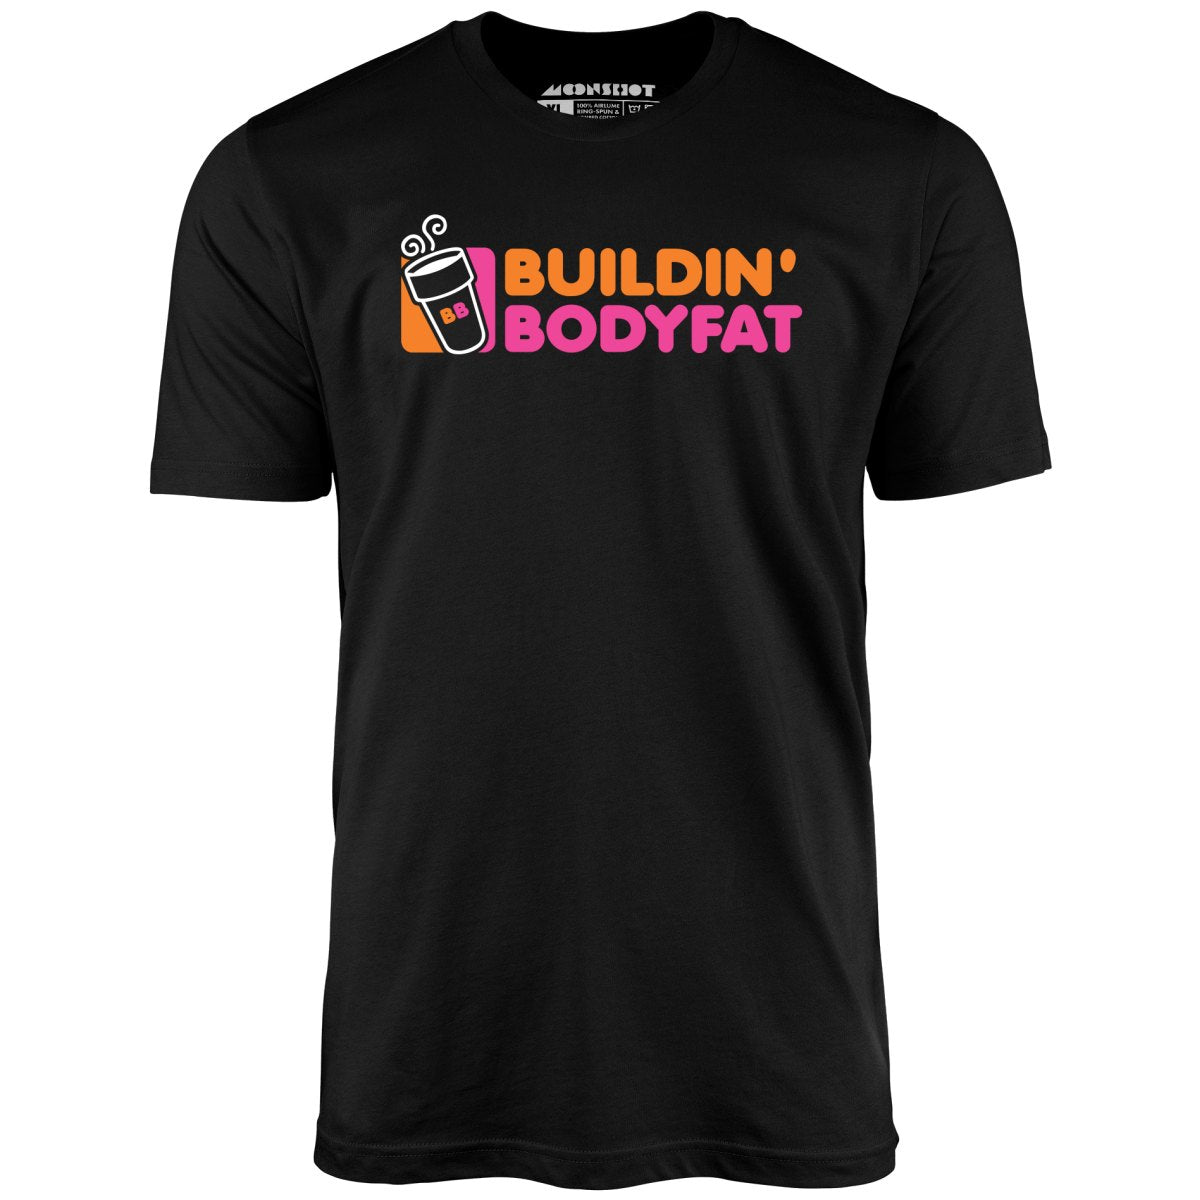 Buildin' Bodyfat - Unisex T-Shirt